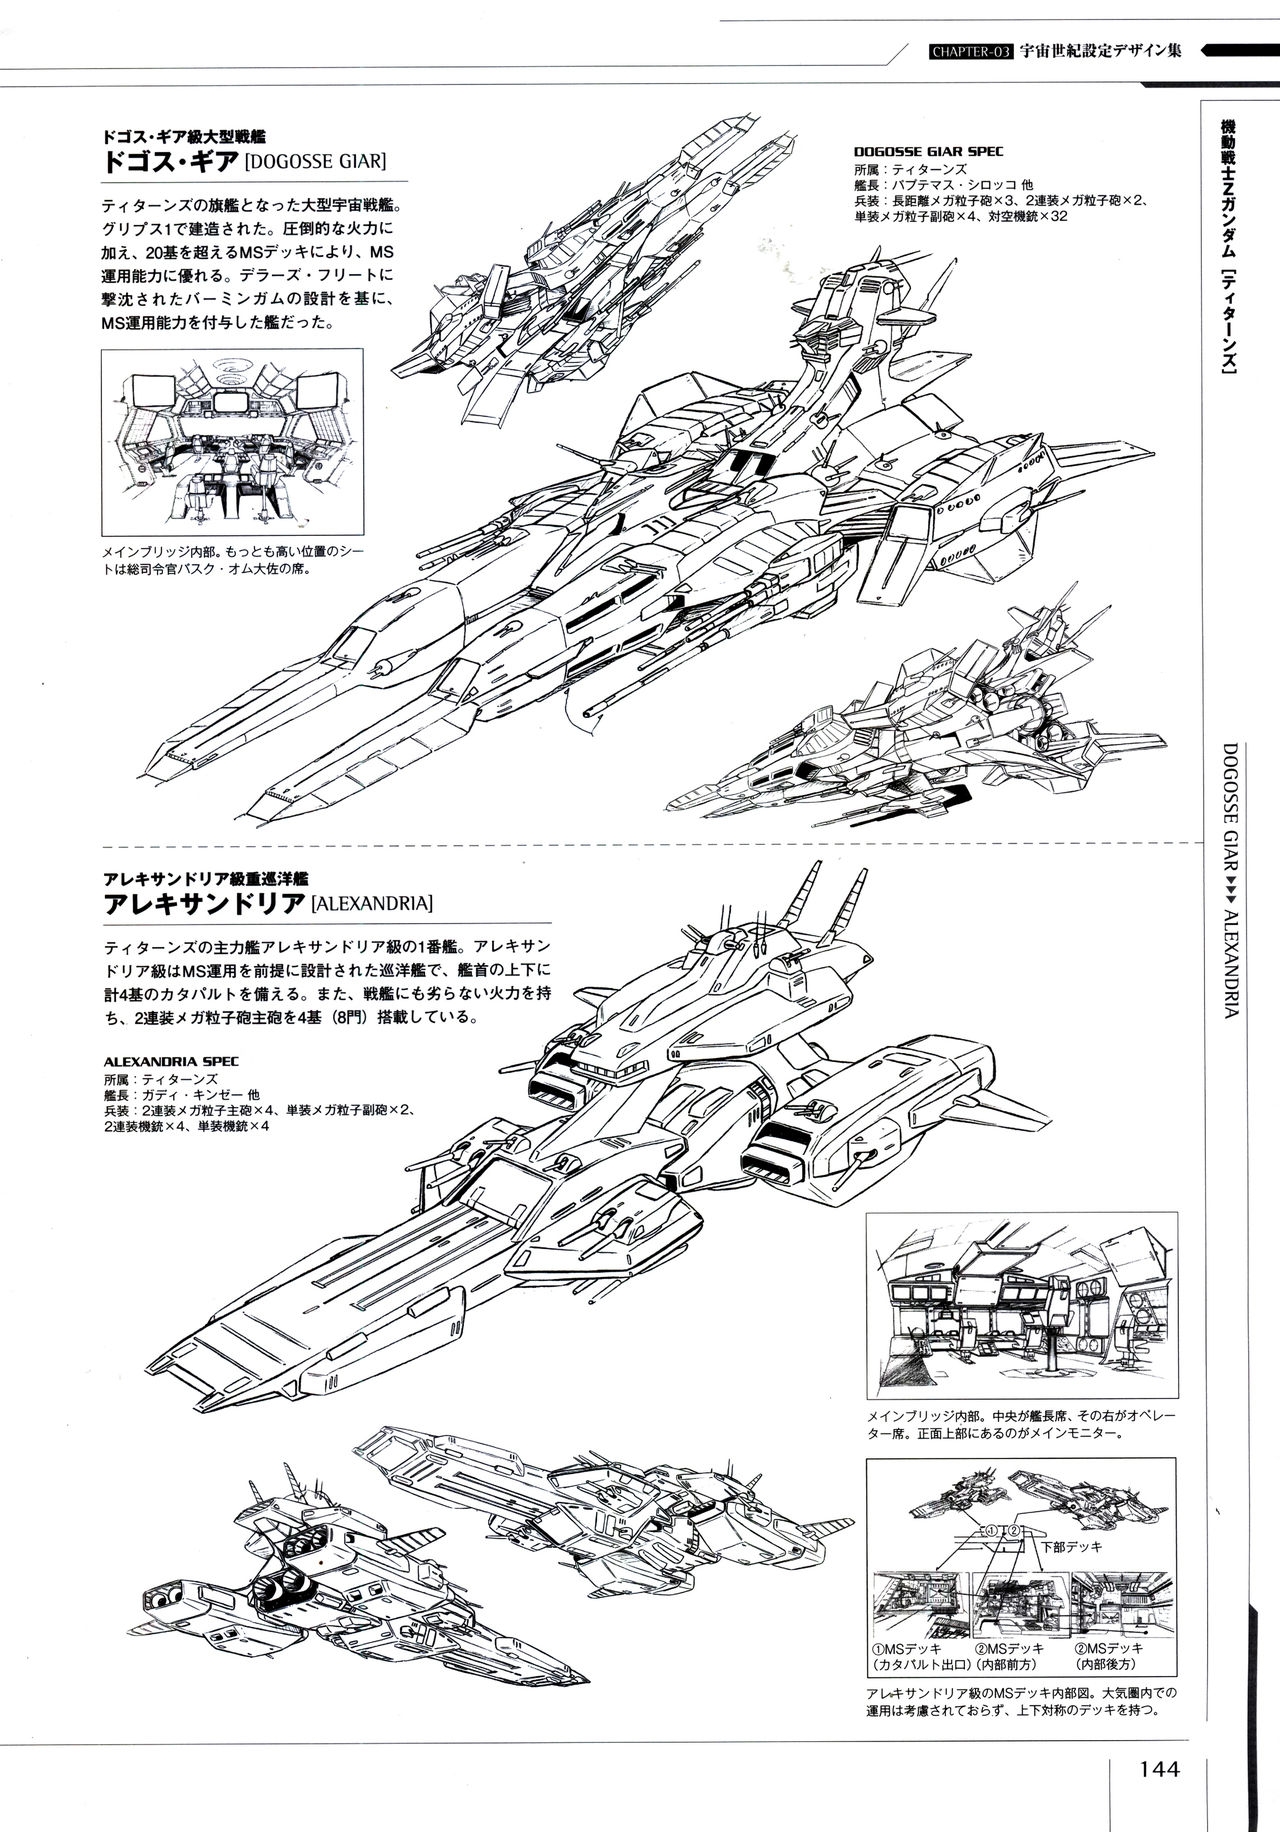 Mobile Suit Gundam - Ship & Aerospace Plane Encyclopedia - Revised Edition 149